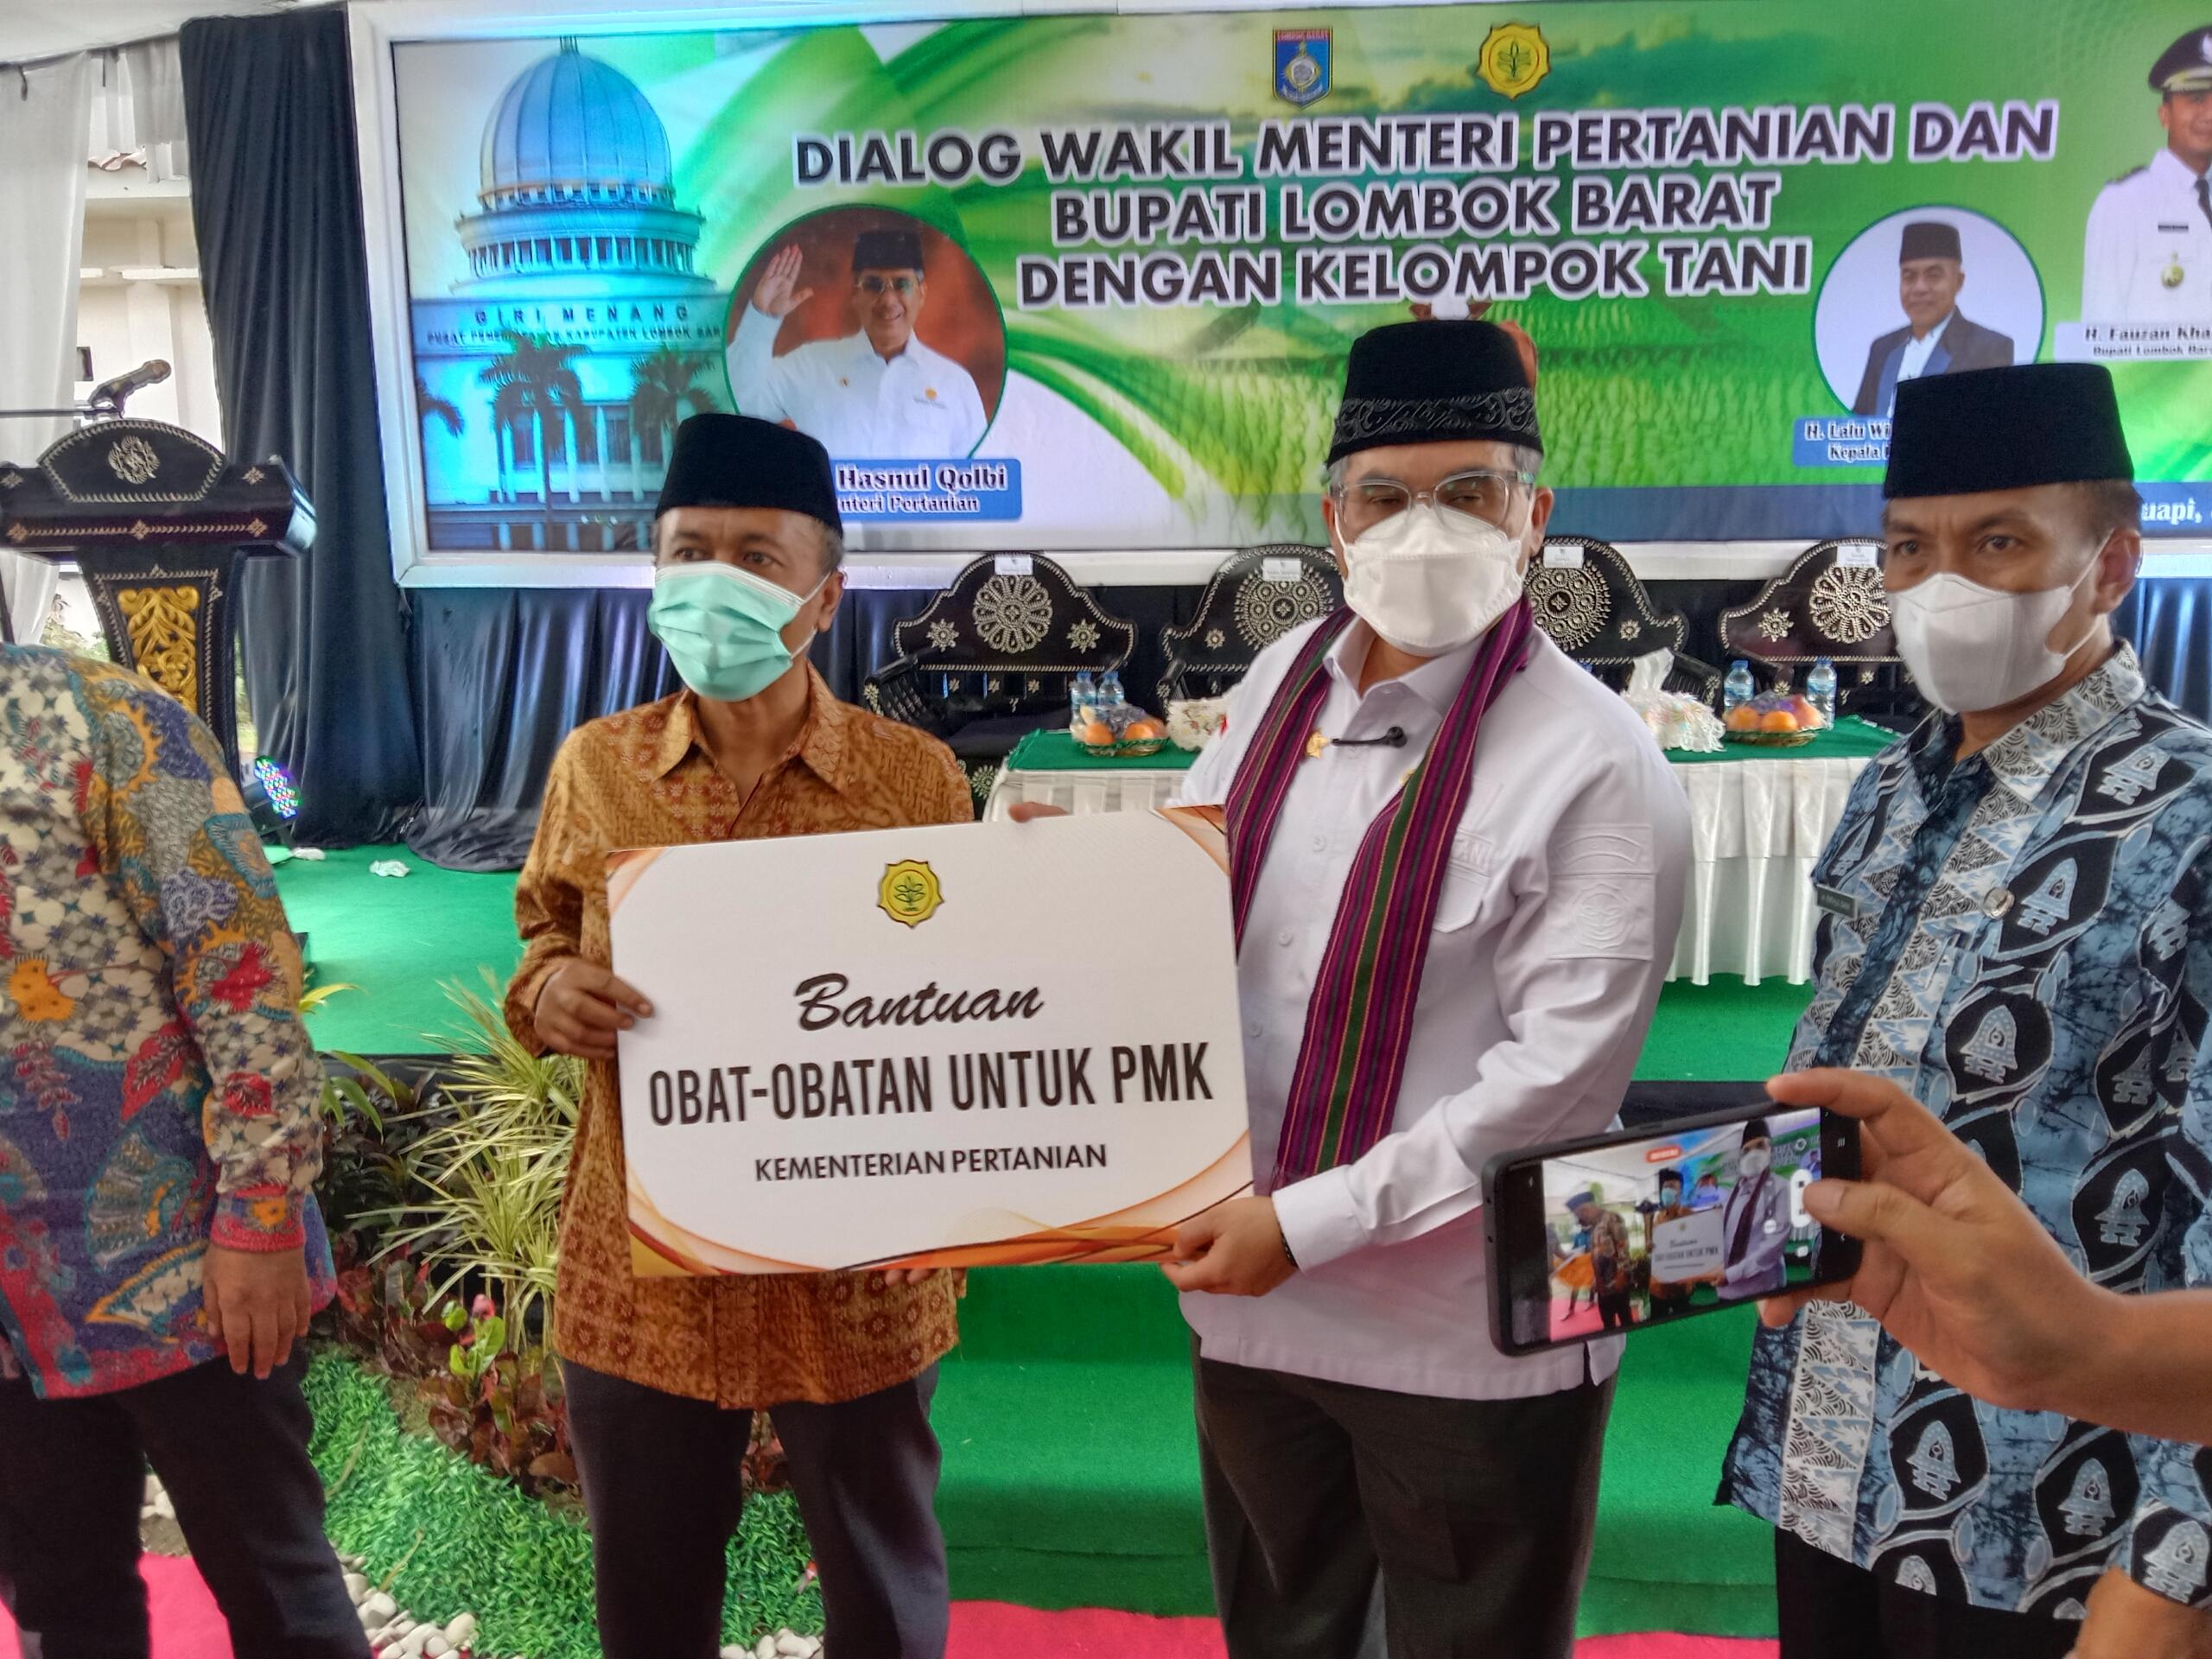 Wakil Menteri Pertanian, Harvick Hasnul Qolbi saat menyerahkan bantuan obat-obatan untuk PMK ke Bupati Lombok Barat, Fauzan Khalid, Kamis (30/6/2022). Foto: Hilmi/Aktual